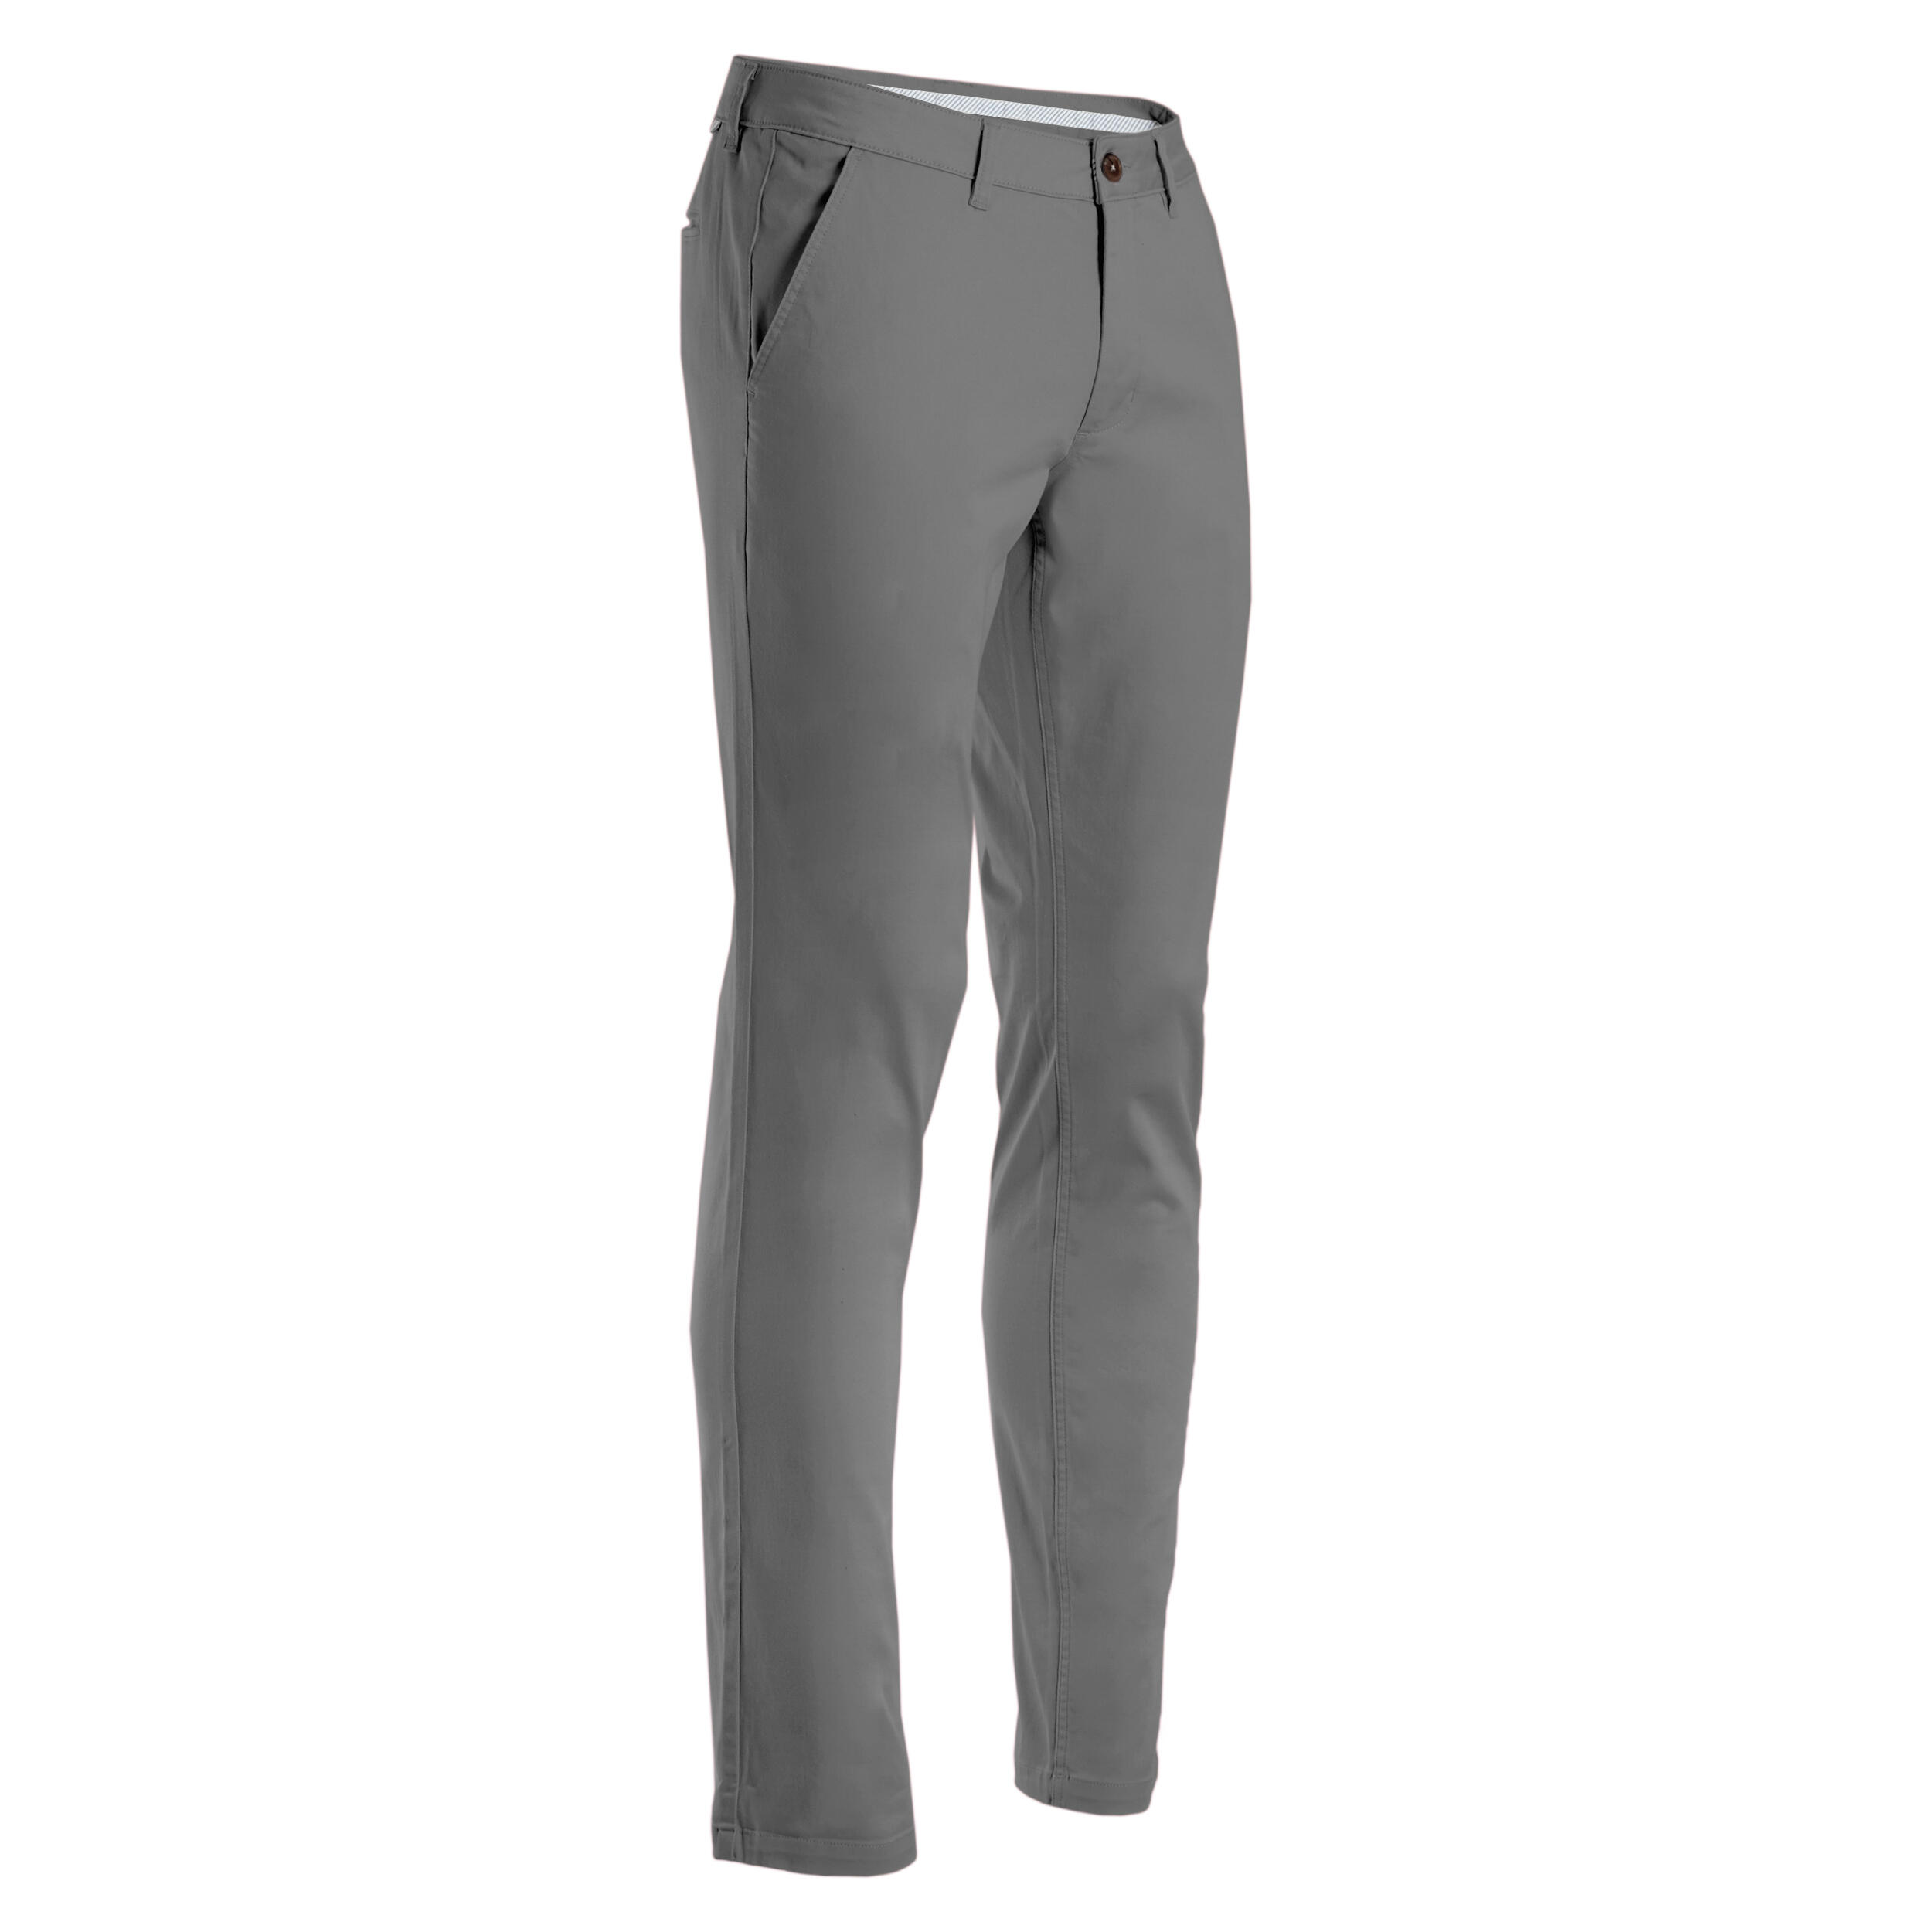 Men's golf trousers - MW500 grey 6/6